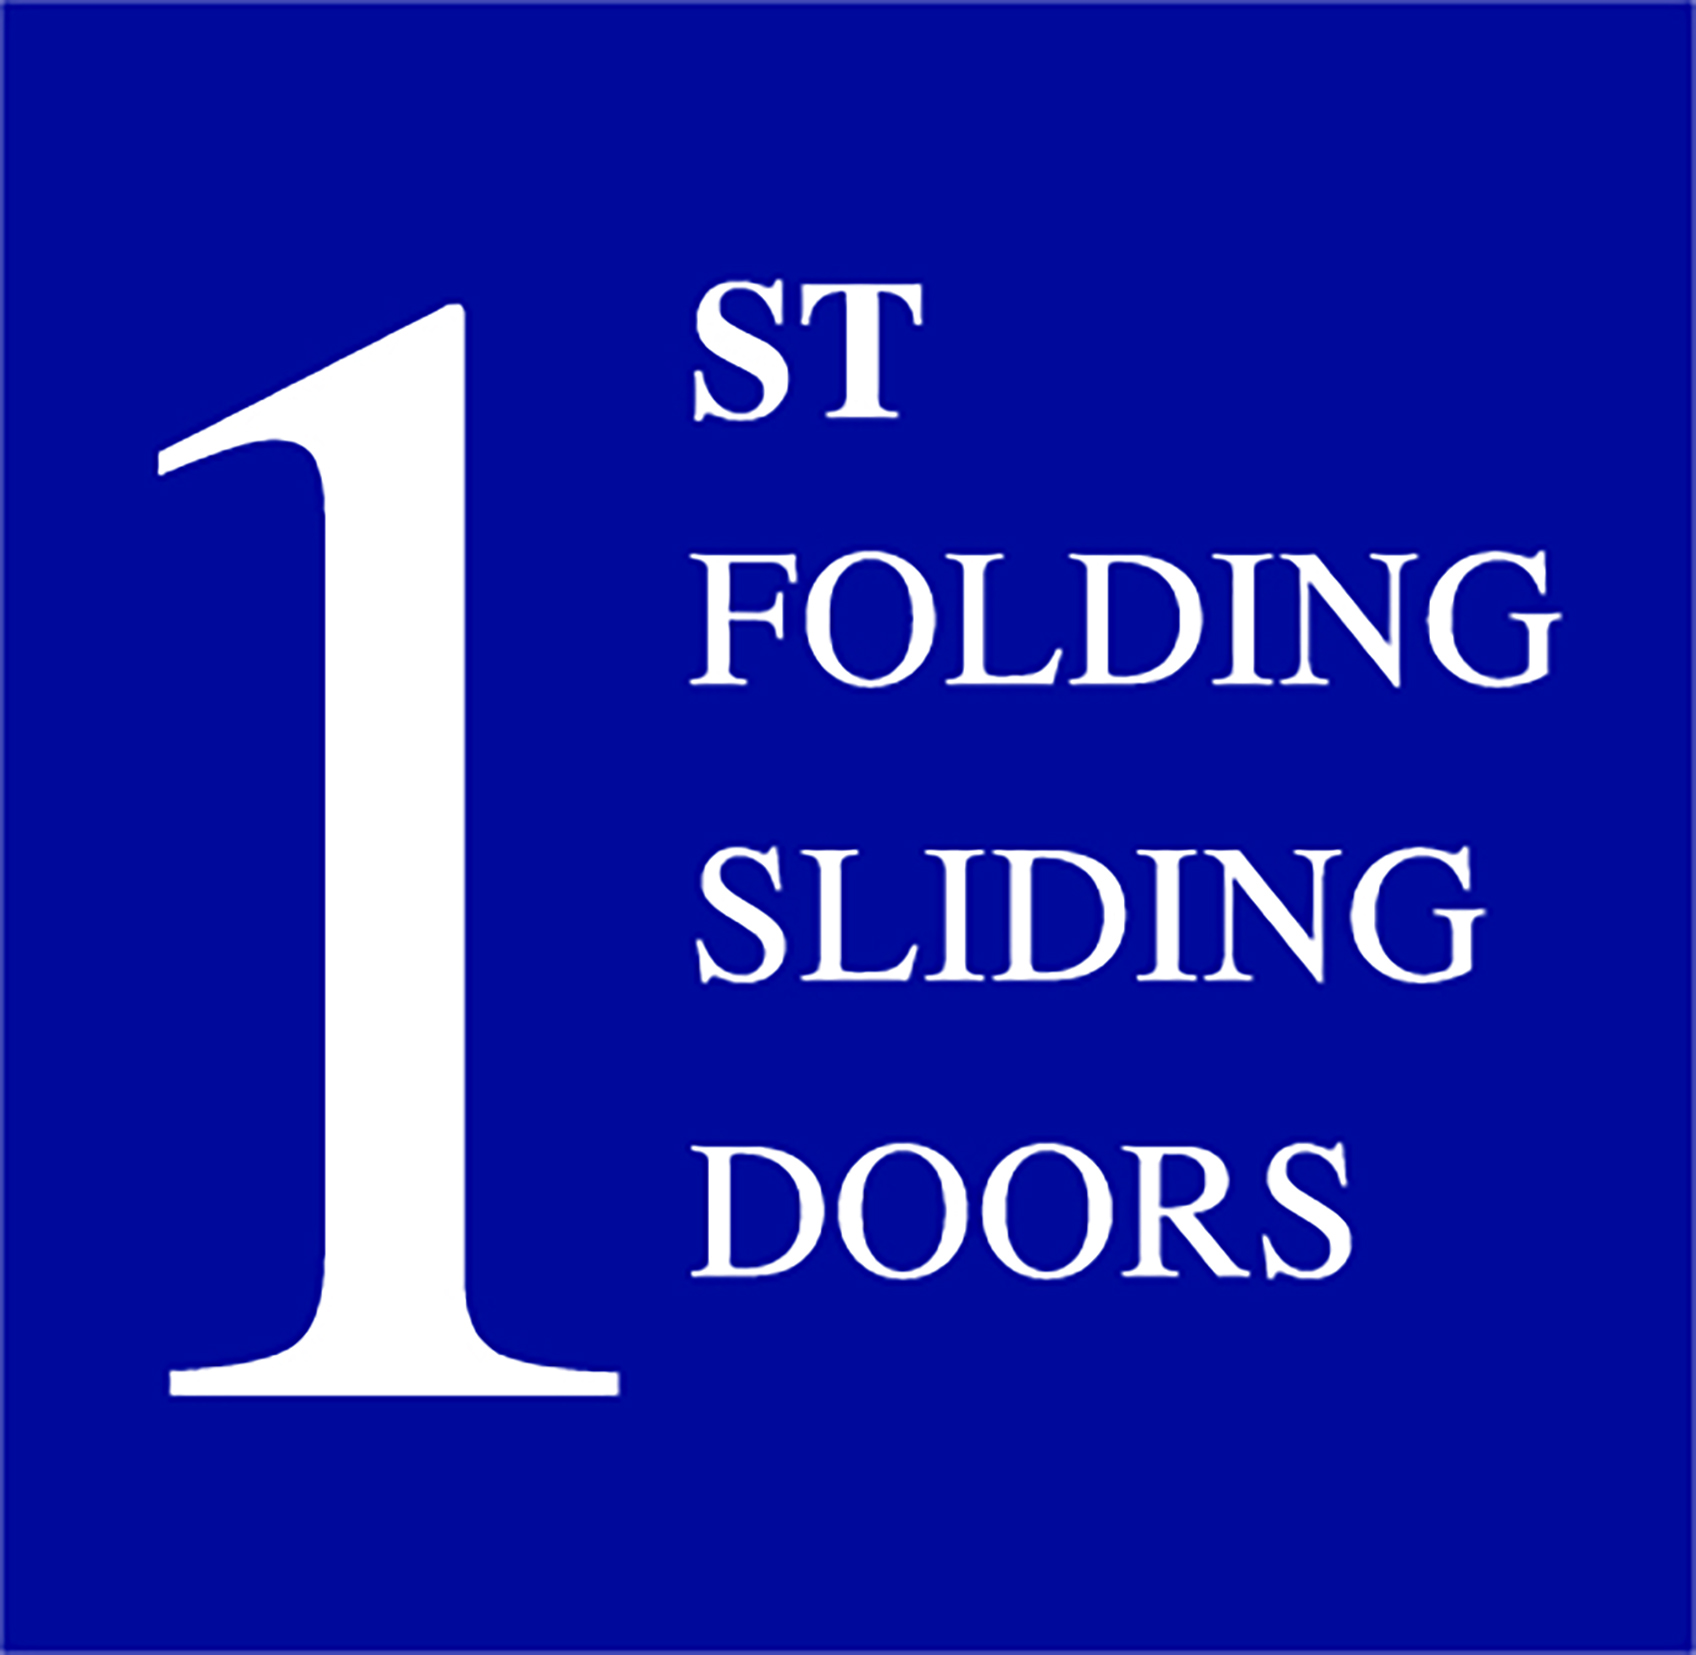 1st Folding Sliding Doors Ltd